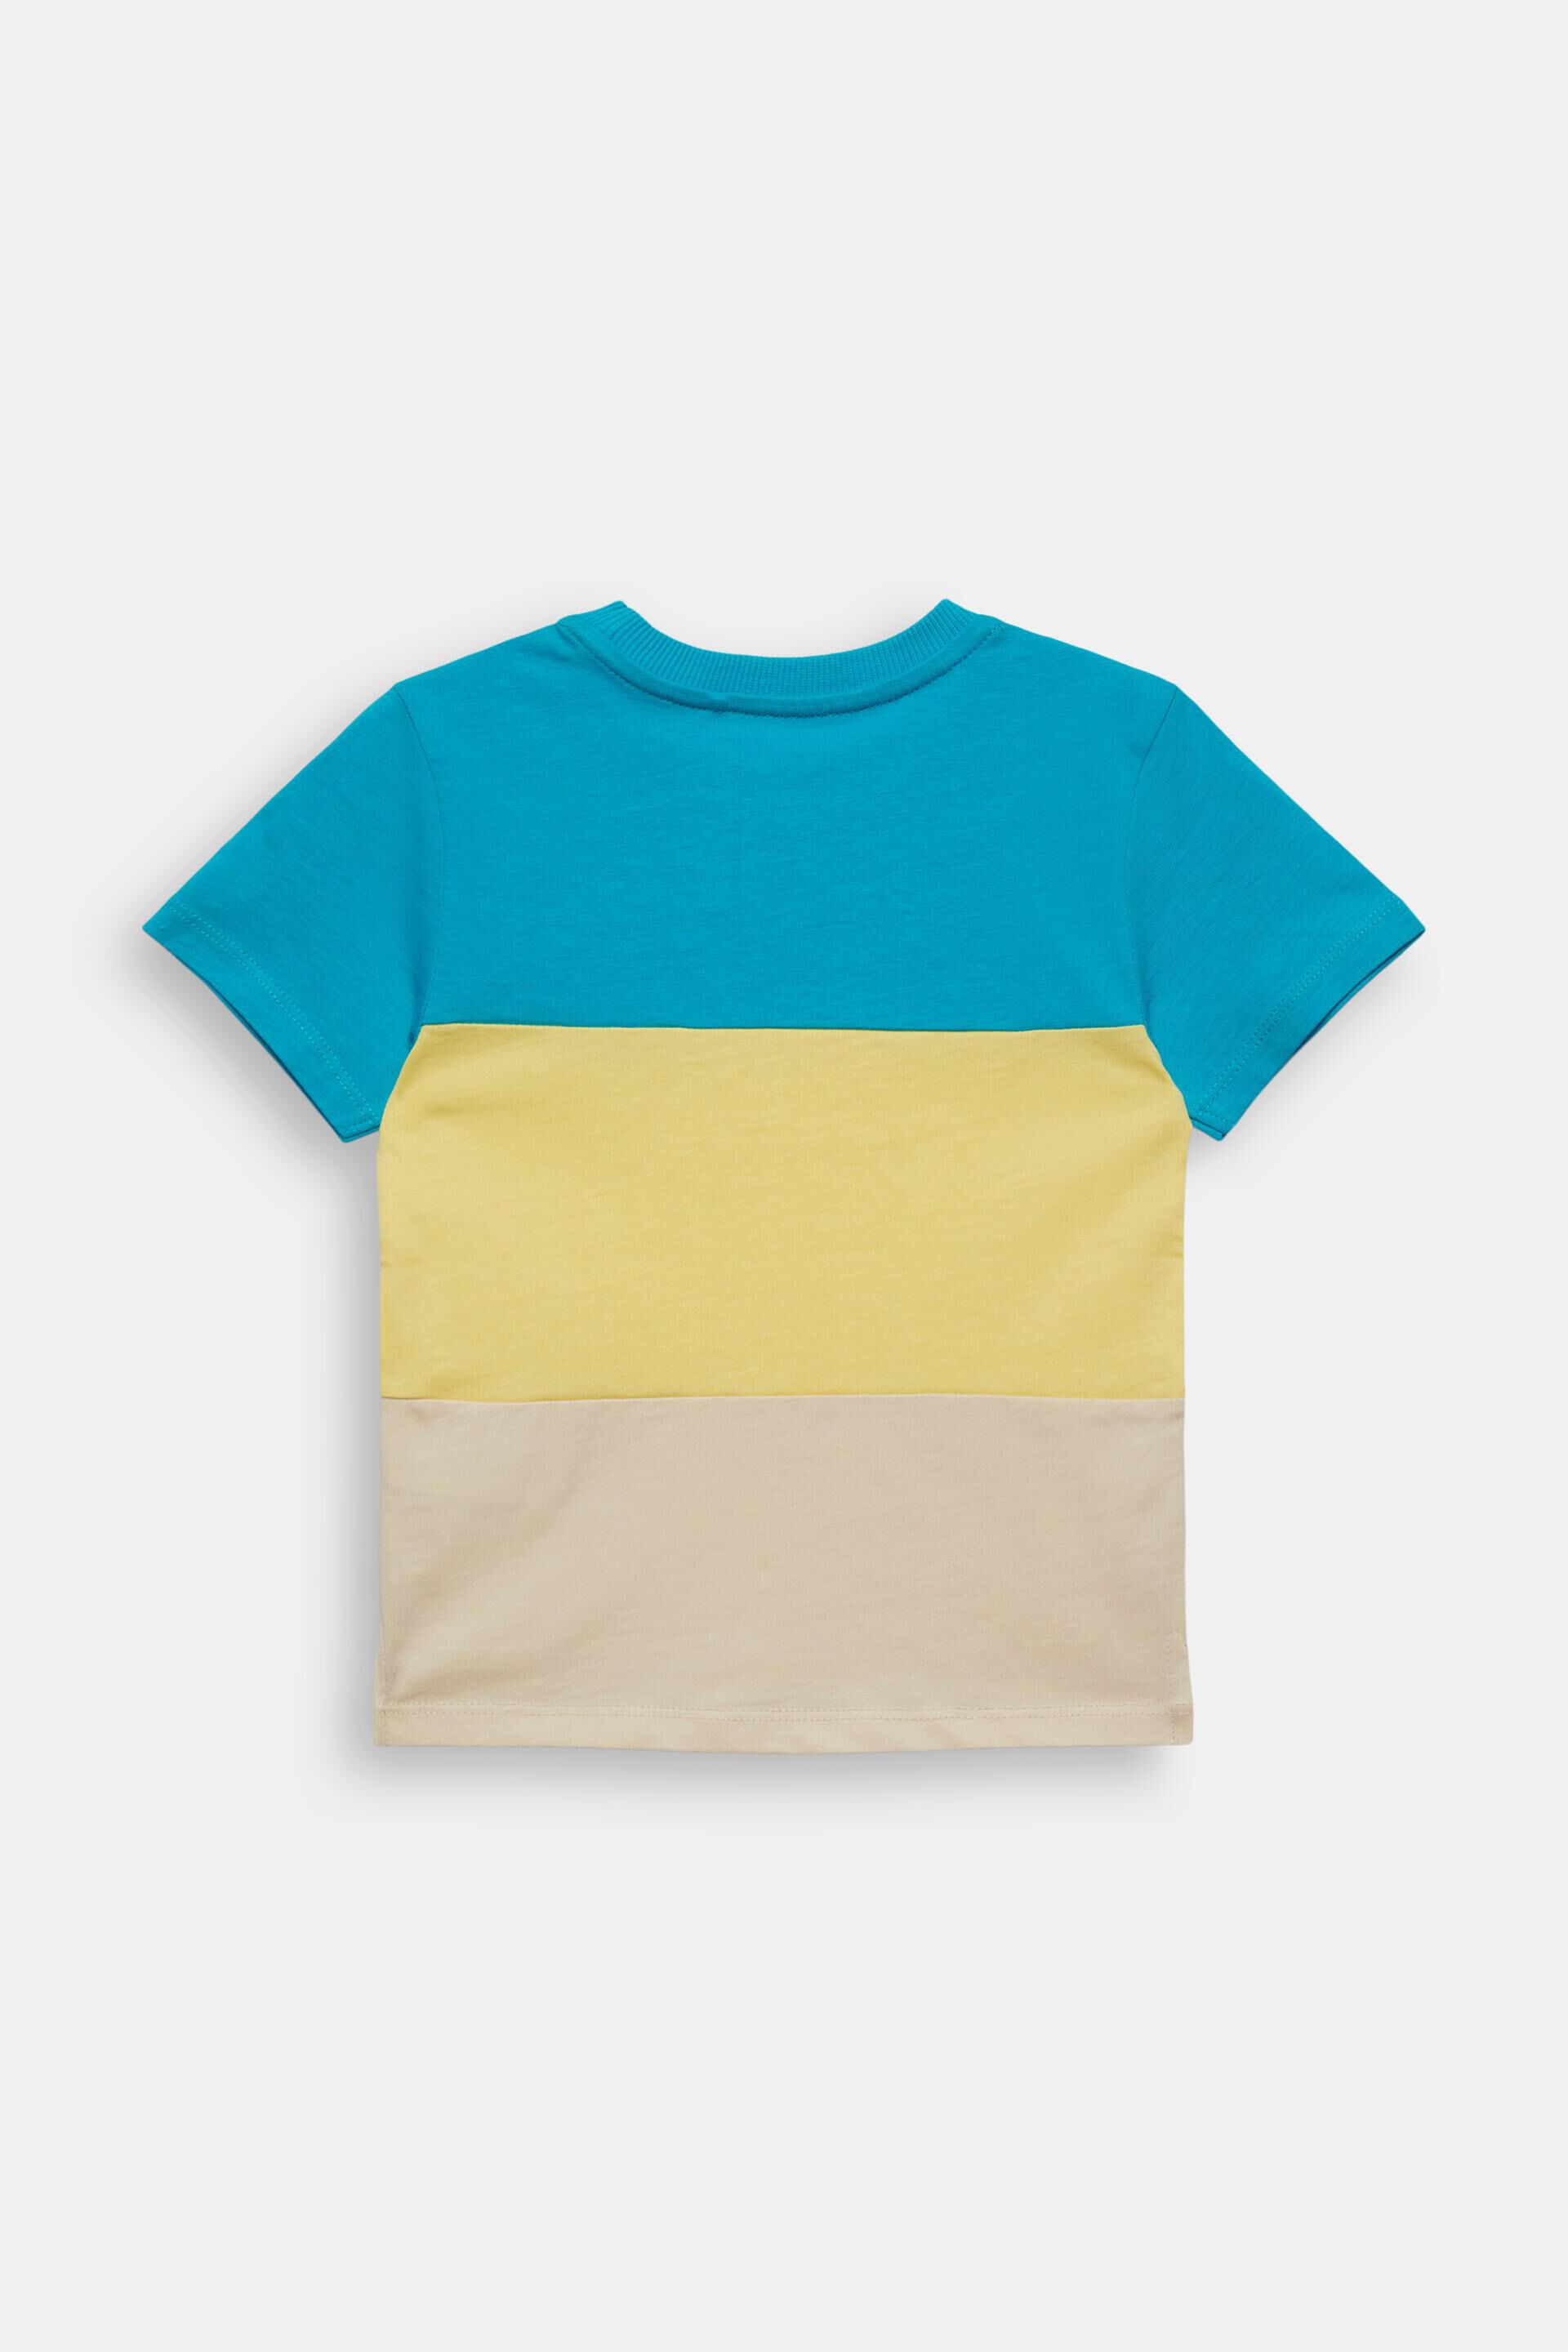 Esprit T-Shirts